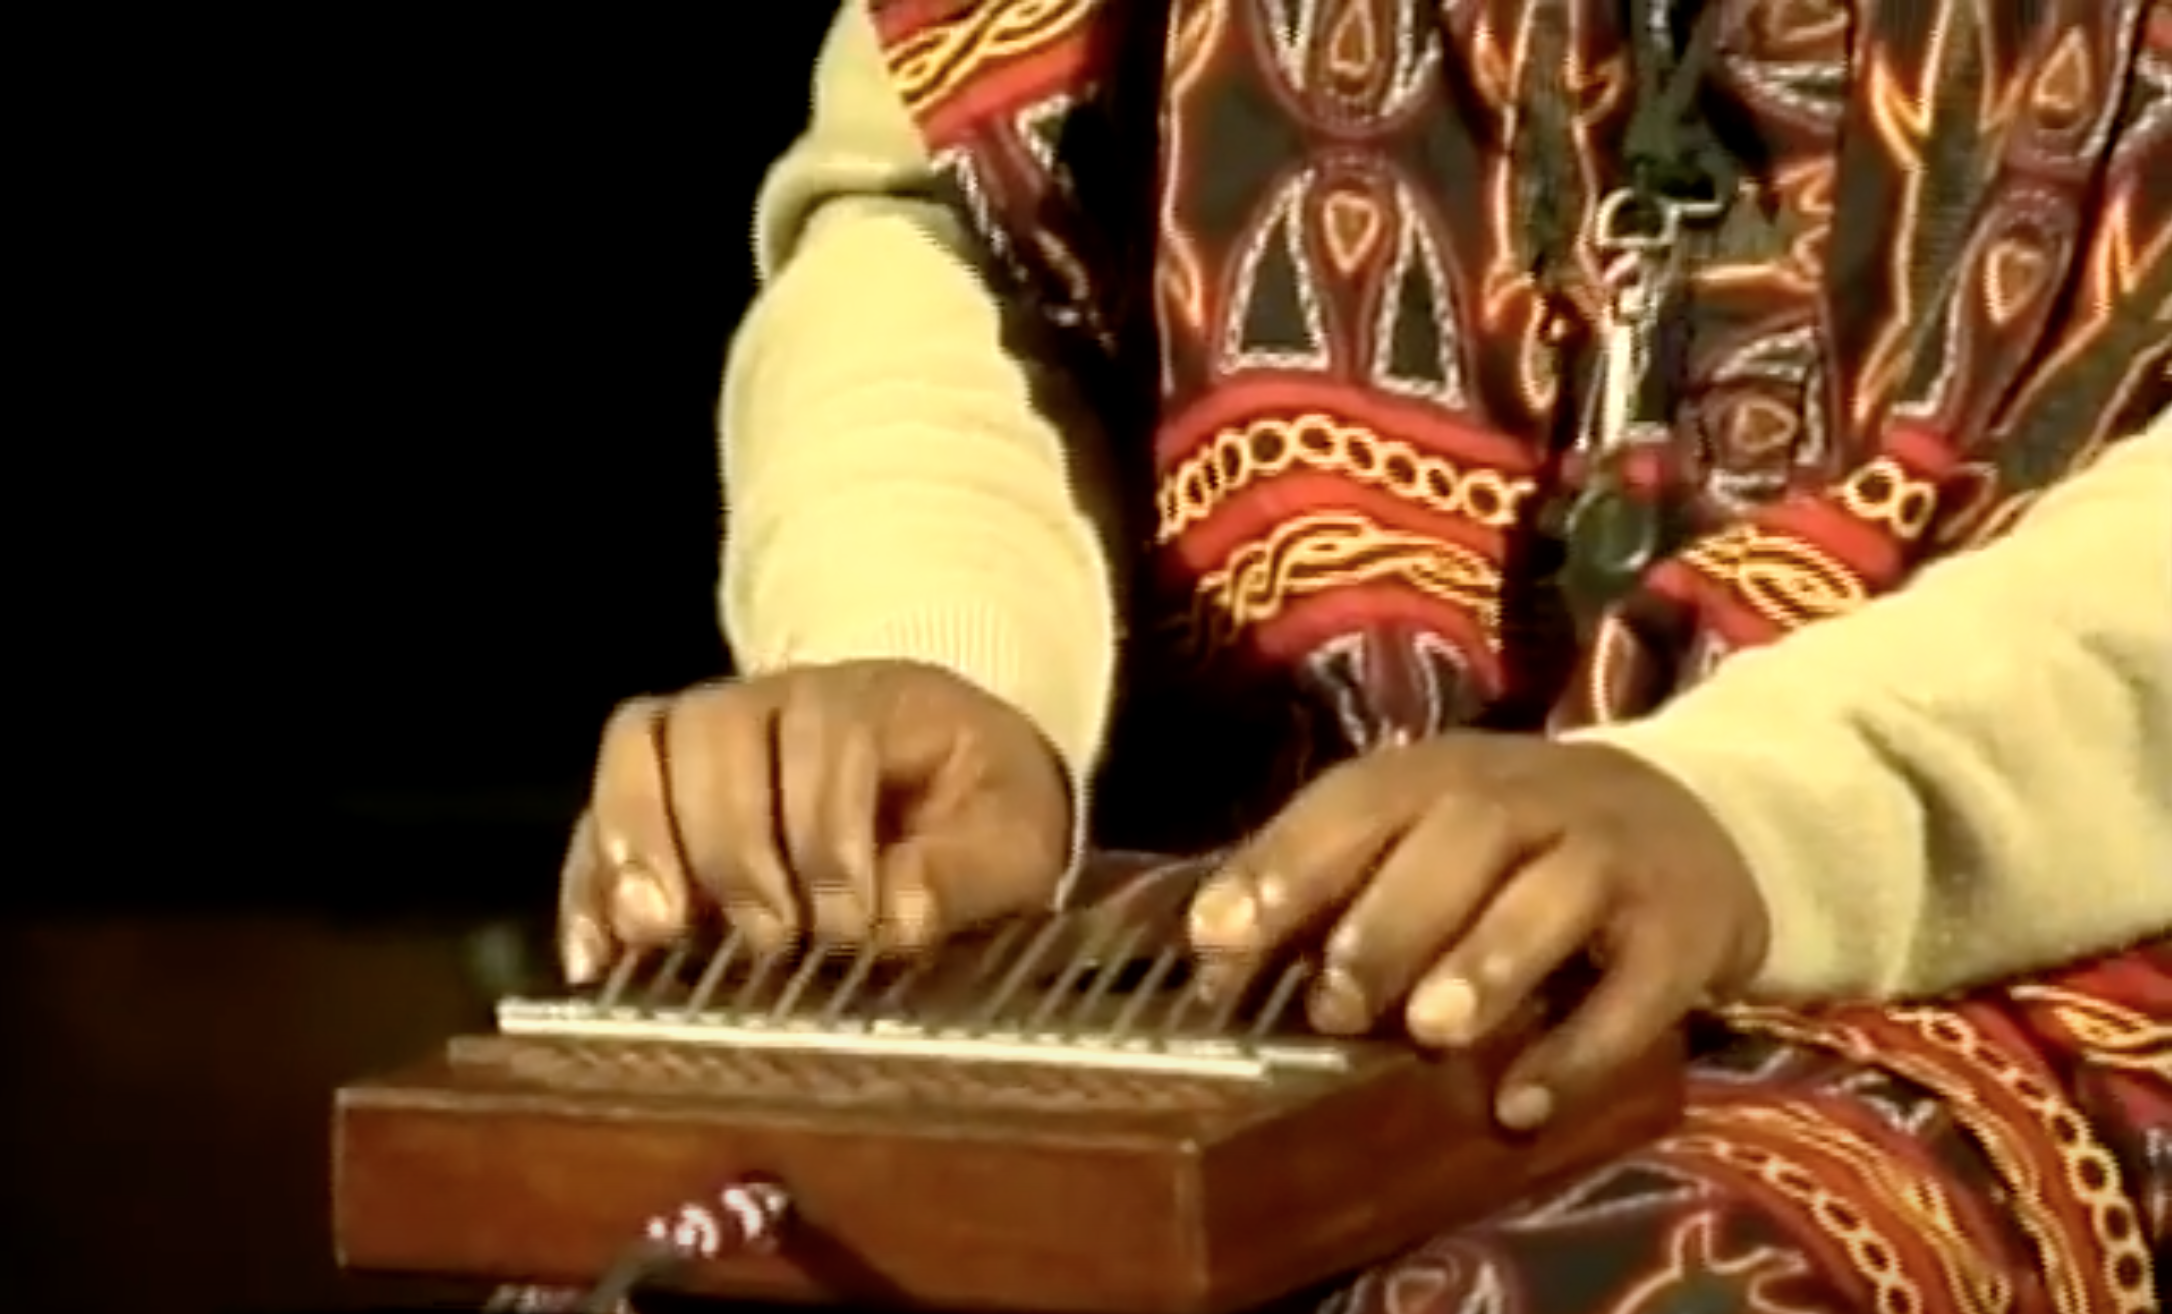 afrique nouvelle musique africa new music toronto canada art arts african congo congolese arthur tongo thomas tumbu festival bana y'afrique Njacko Backo